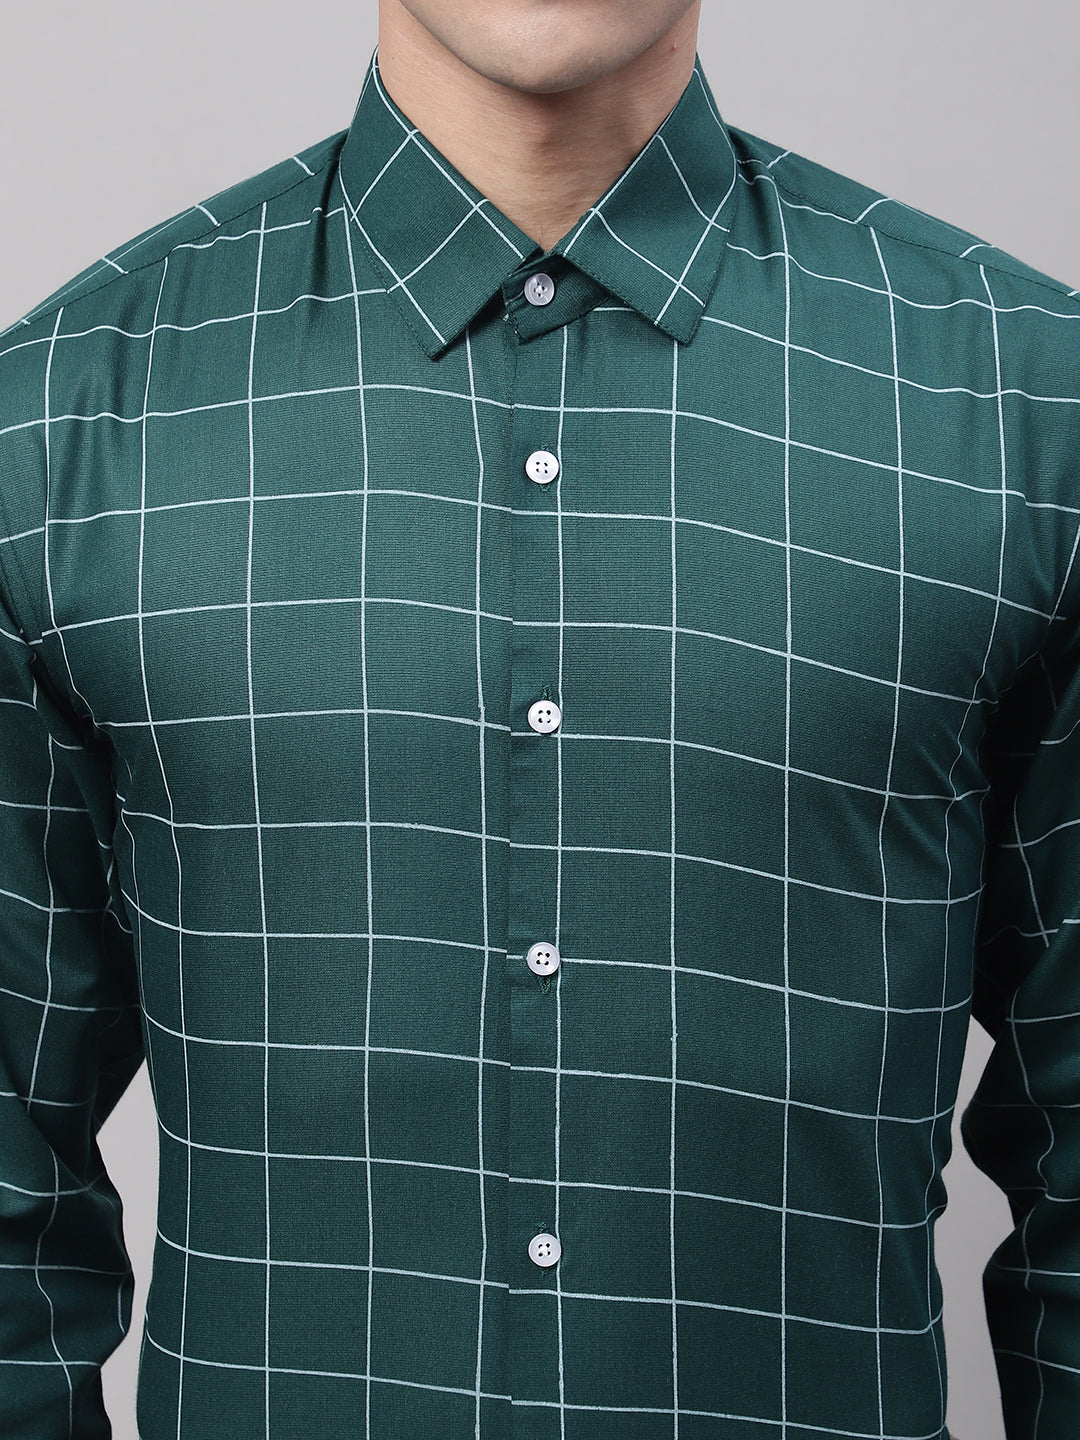 Men's Green Cotton Checked Formal Shirt